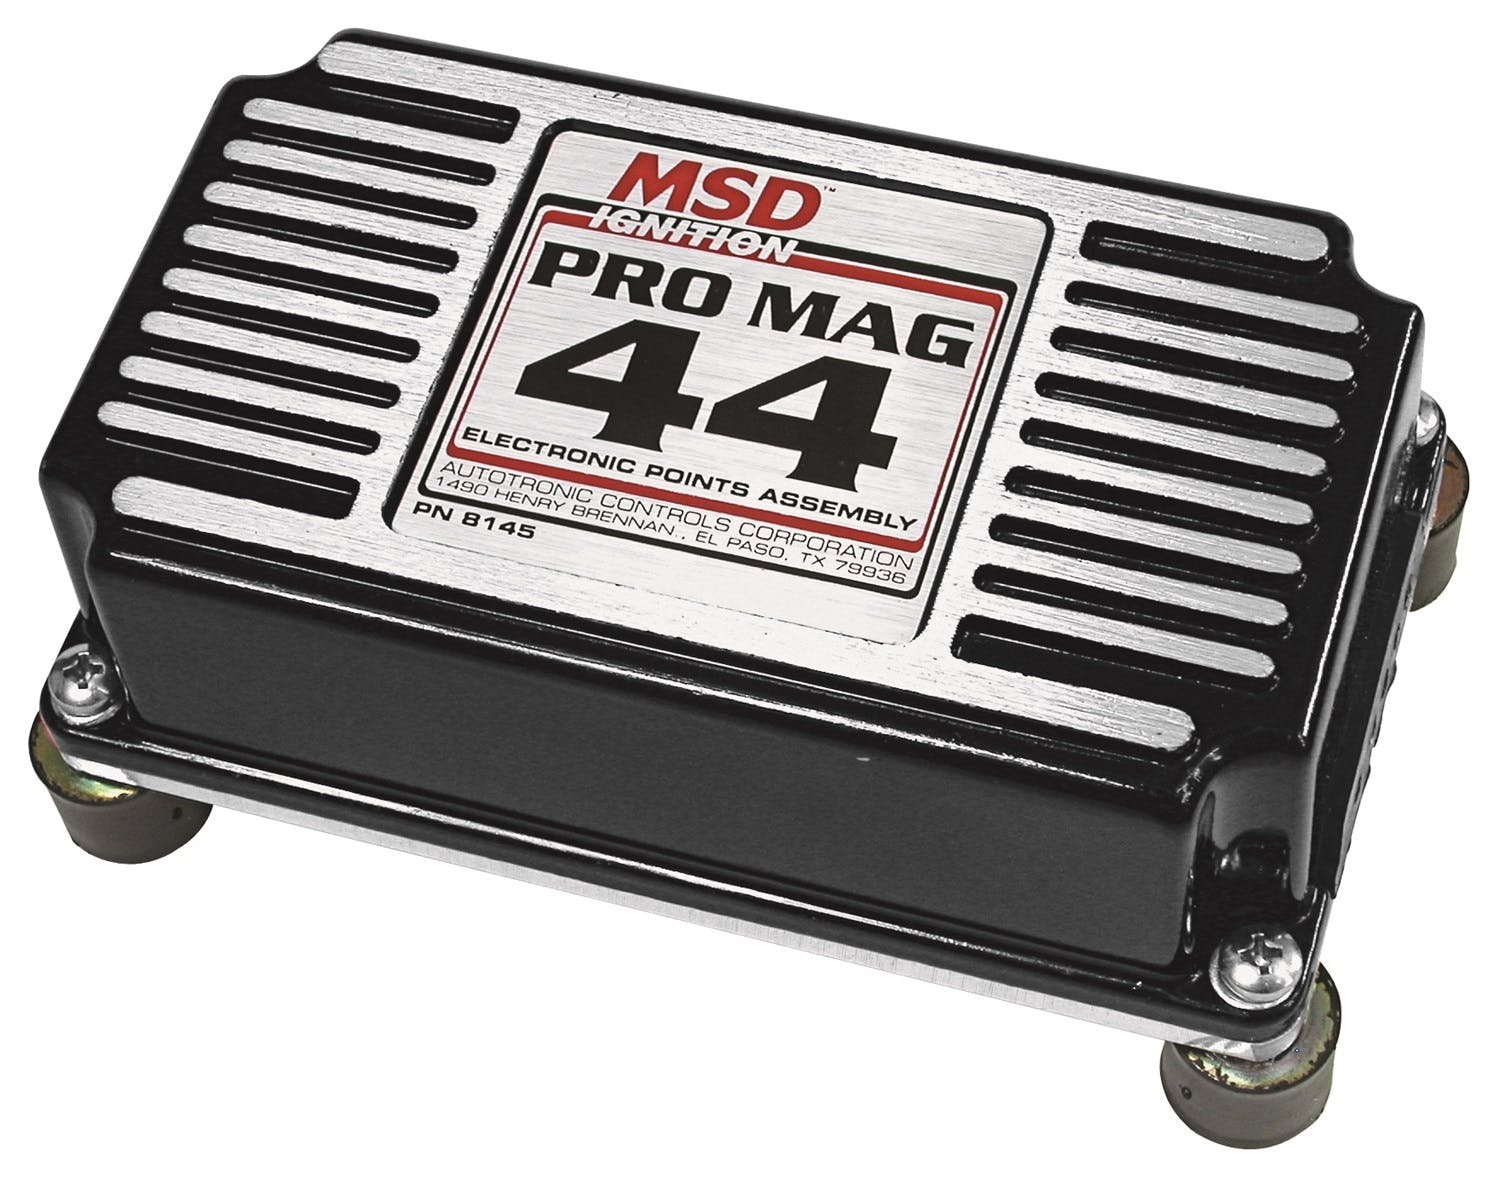 MSD Performance 81453 Electronic Pts Box ProMag 44 Amp, Black